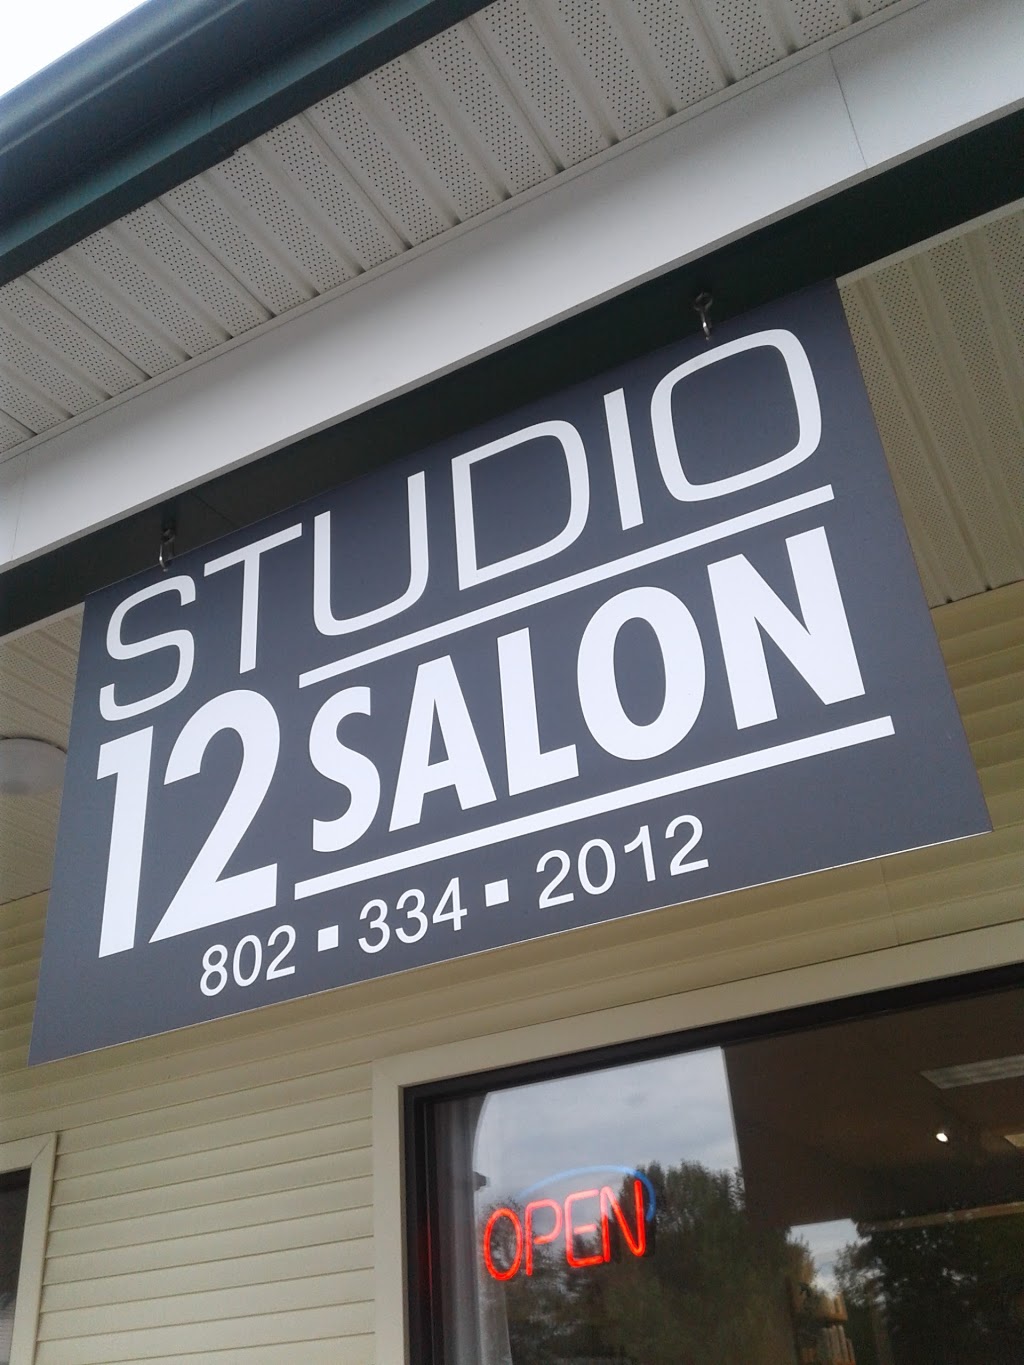 Studio 12 Salon | hair care | 5452 US-5, Newport, VT 05855, USA | 8023342012 OR +1 802-334-2012